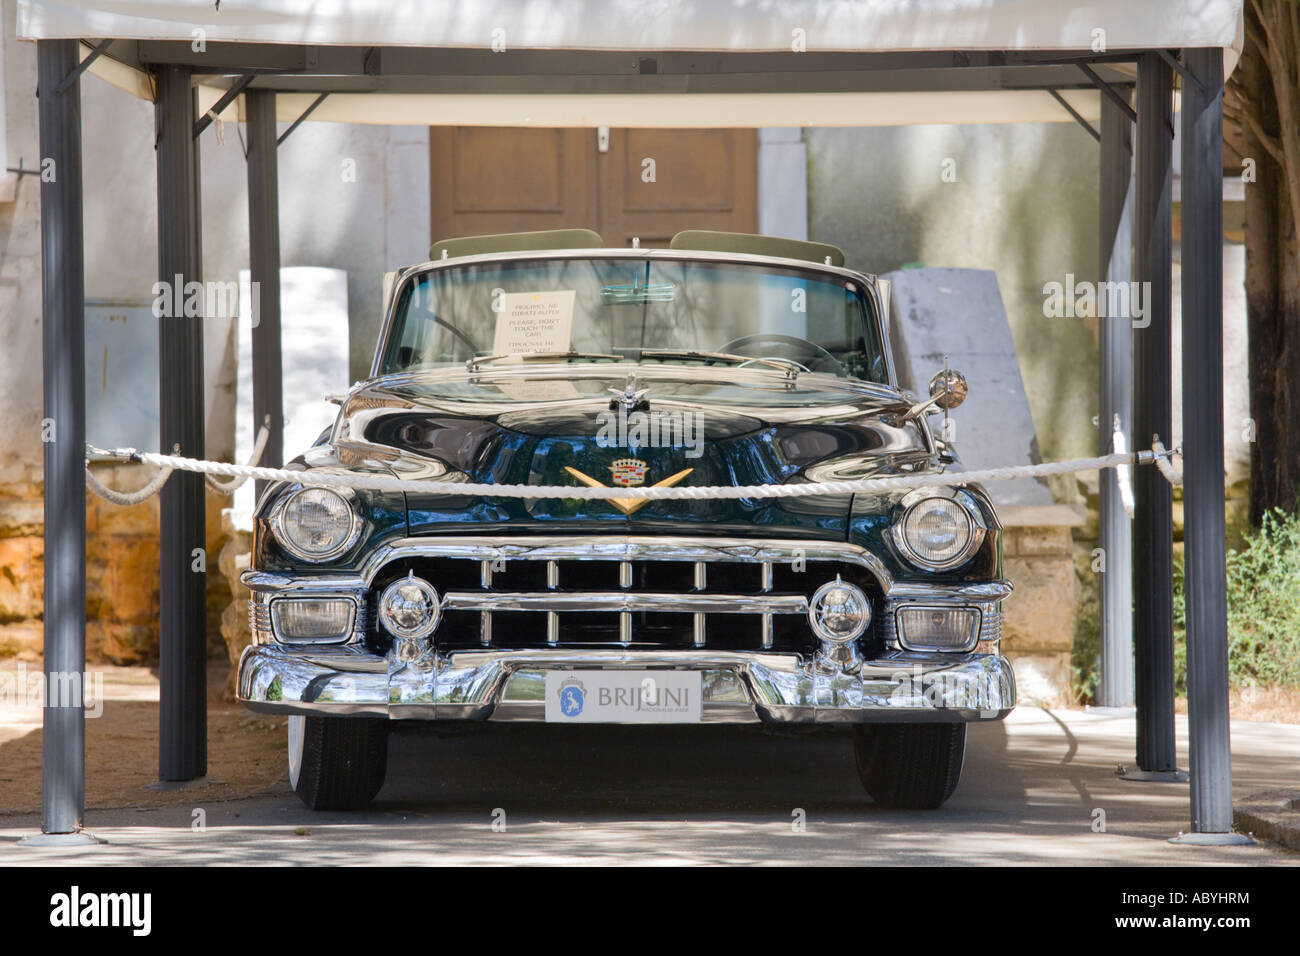 Frontal view of Tito's Cadillac Eldorado from 1953, Brioni islands, Veliki Brijun, Croatia Stock Photo